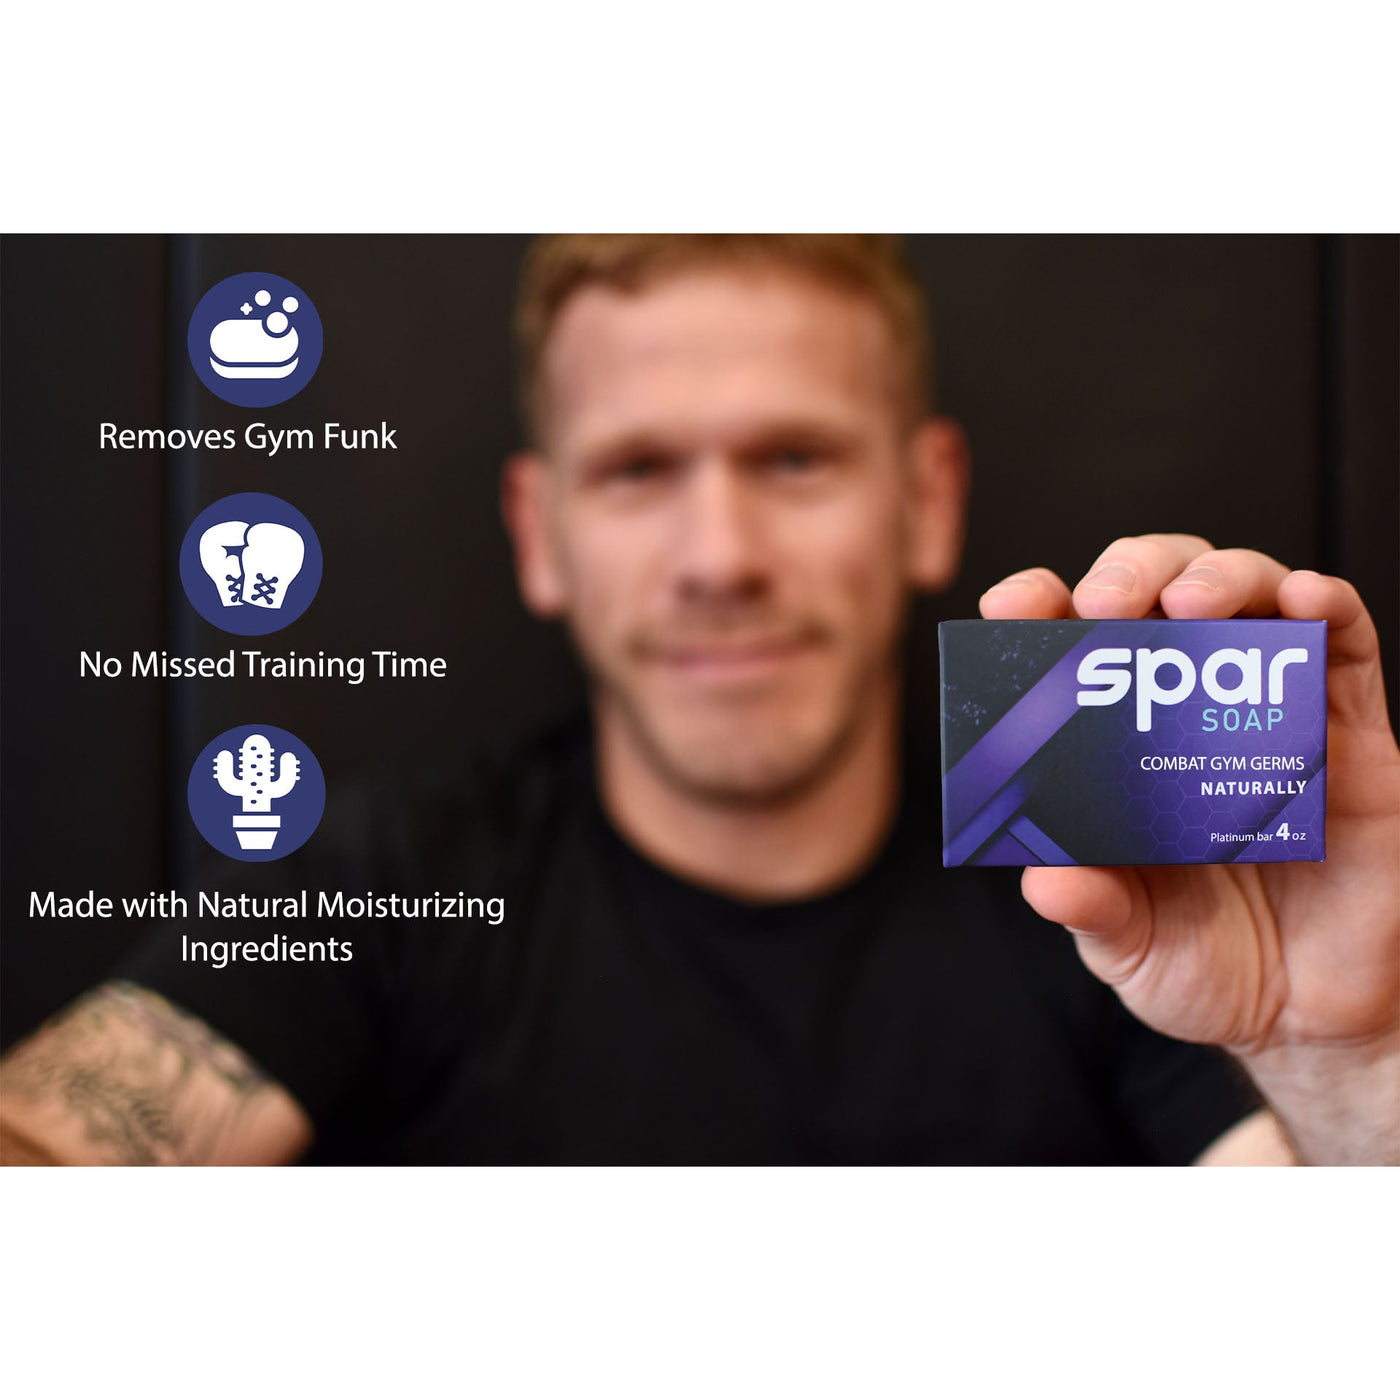 Platinum Bar - Spar Soap | Natural Soap for Combat Athletes